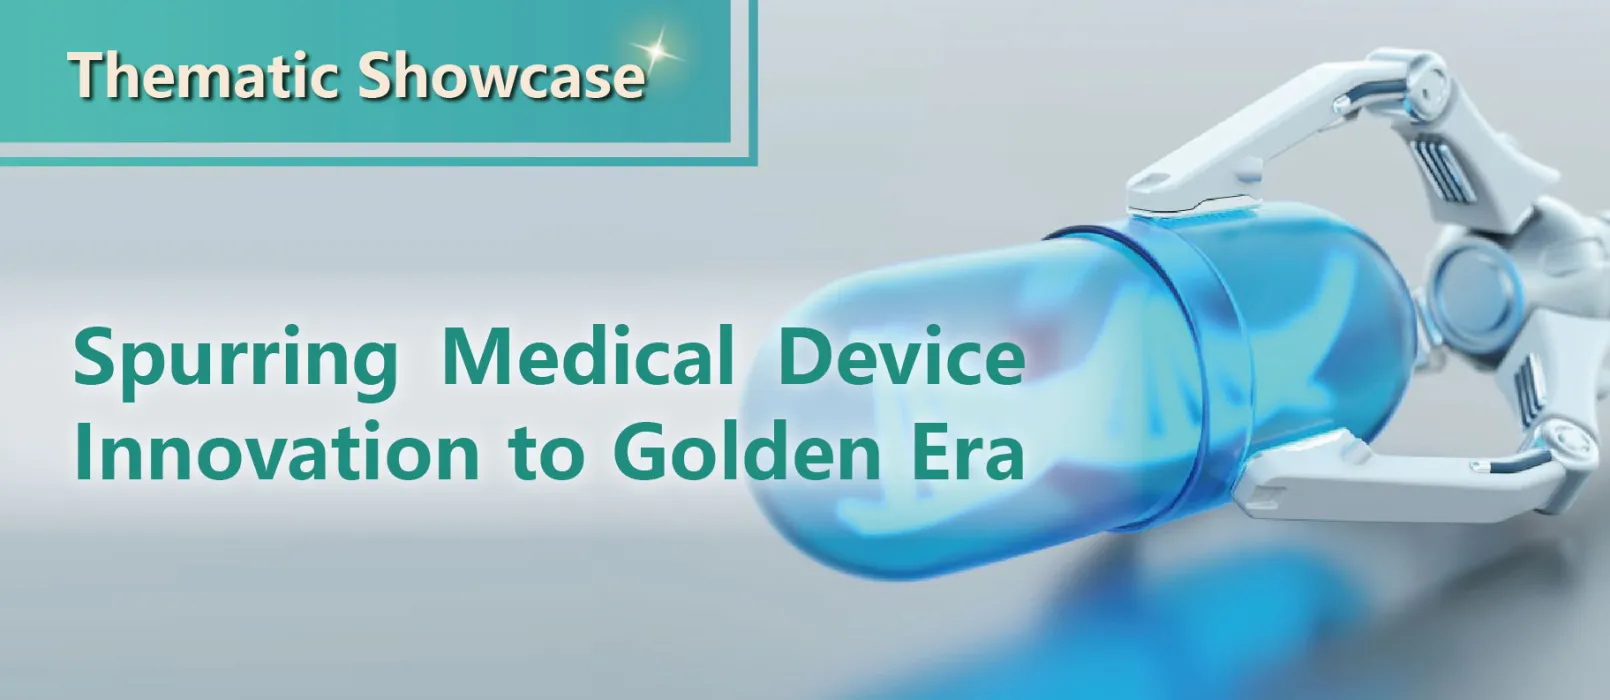 Spurring Medical Device Innovation to Golden Era